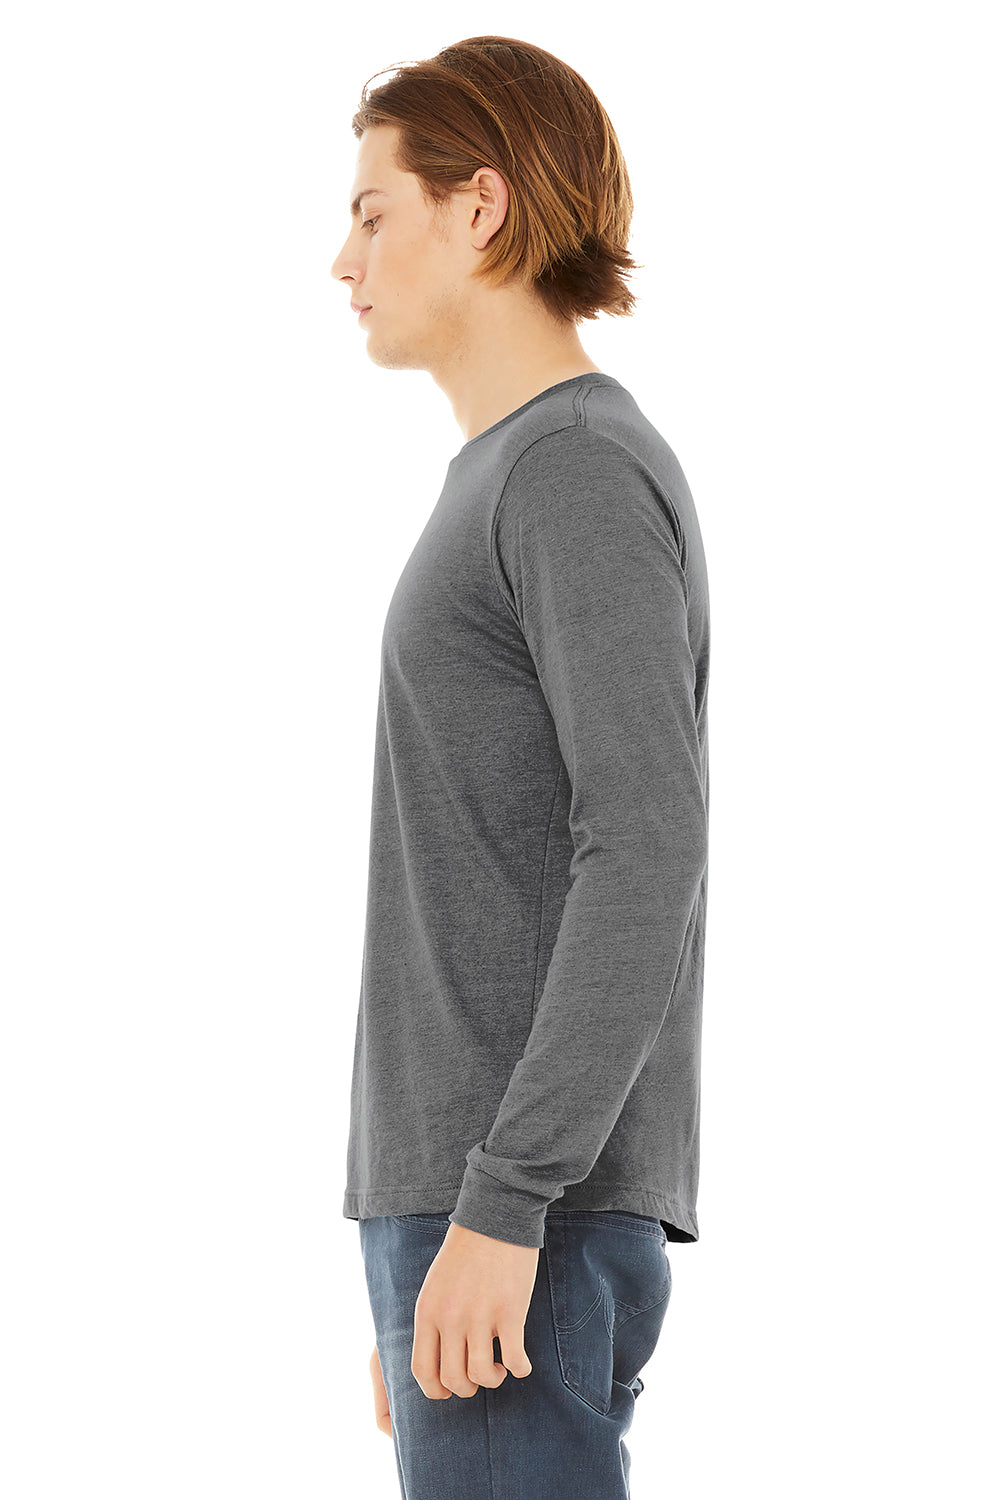 Bella + Canvas BC3513 Mens Long Sleeve Crewneck T-Shirt Grey Model Side